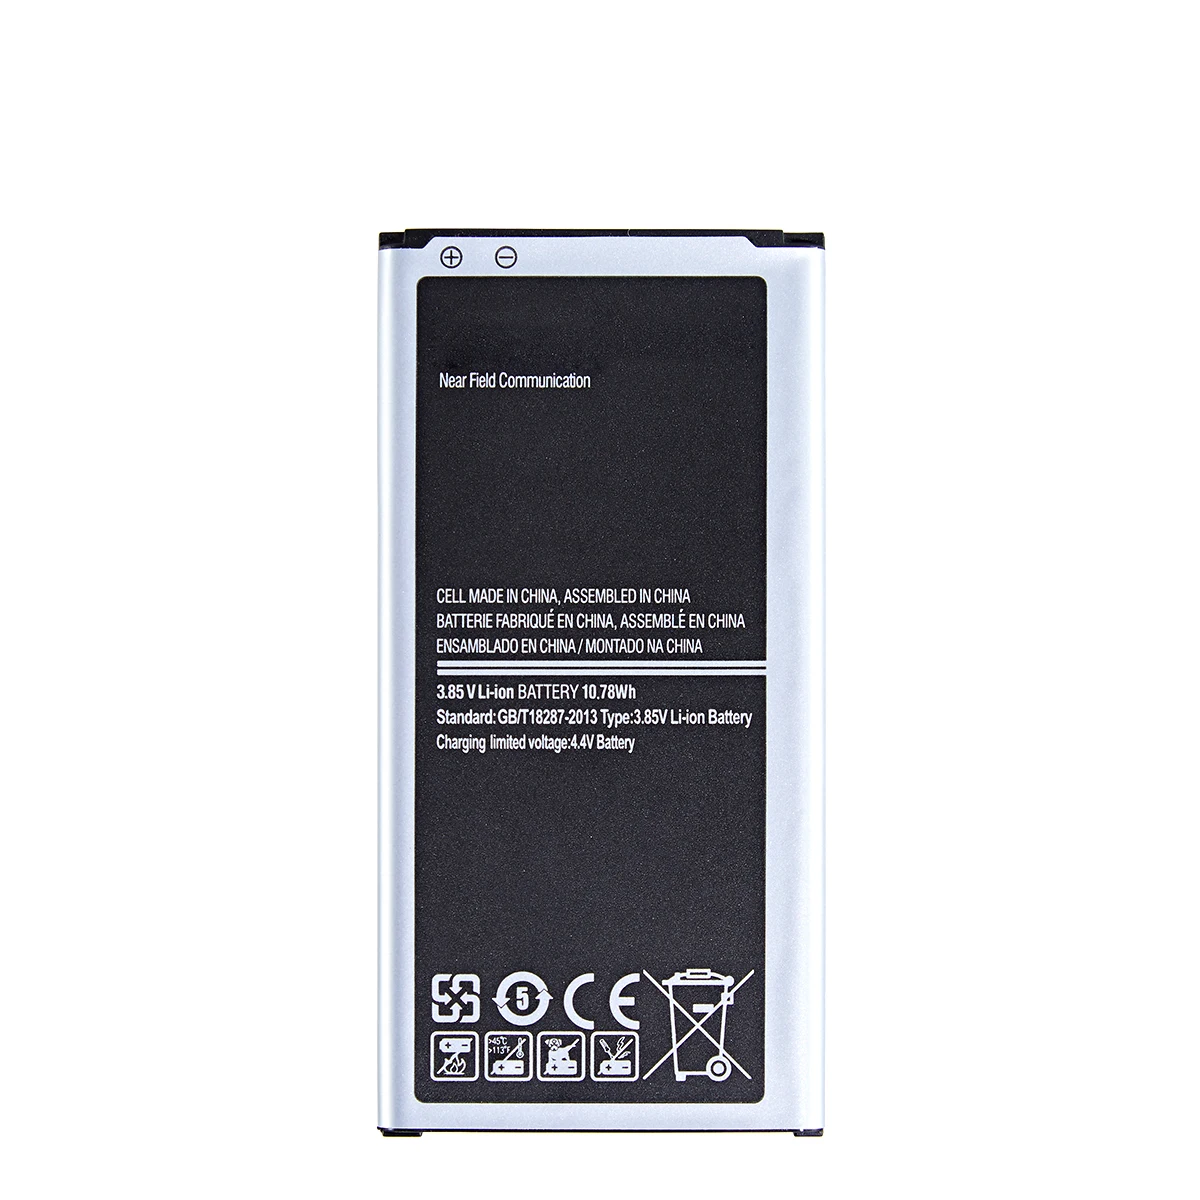 Zbrusu Novej EB-BG900BBC EB-BG900BBE/BBU 2800mAh Batérie Pre Samsung Galaxy S5 SM-G870A G900S/F/M/FD G9008V/W 9006V/W NFC